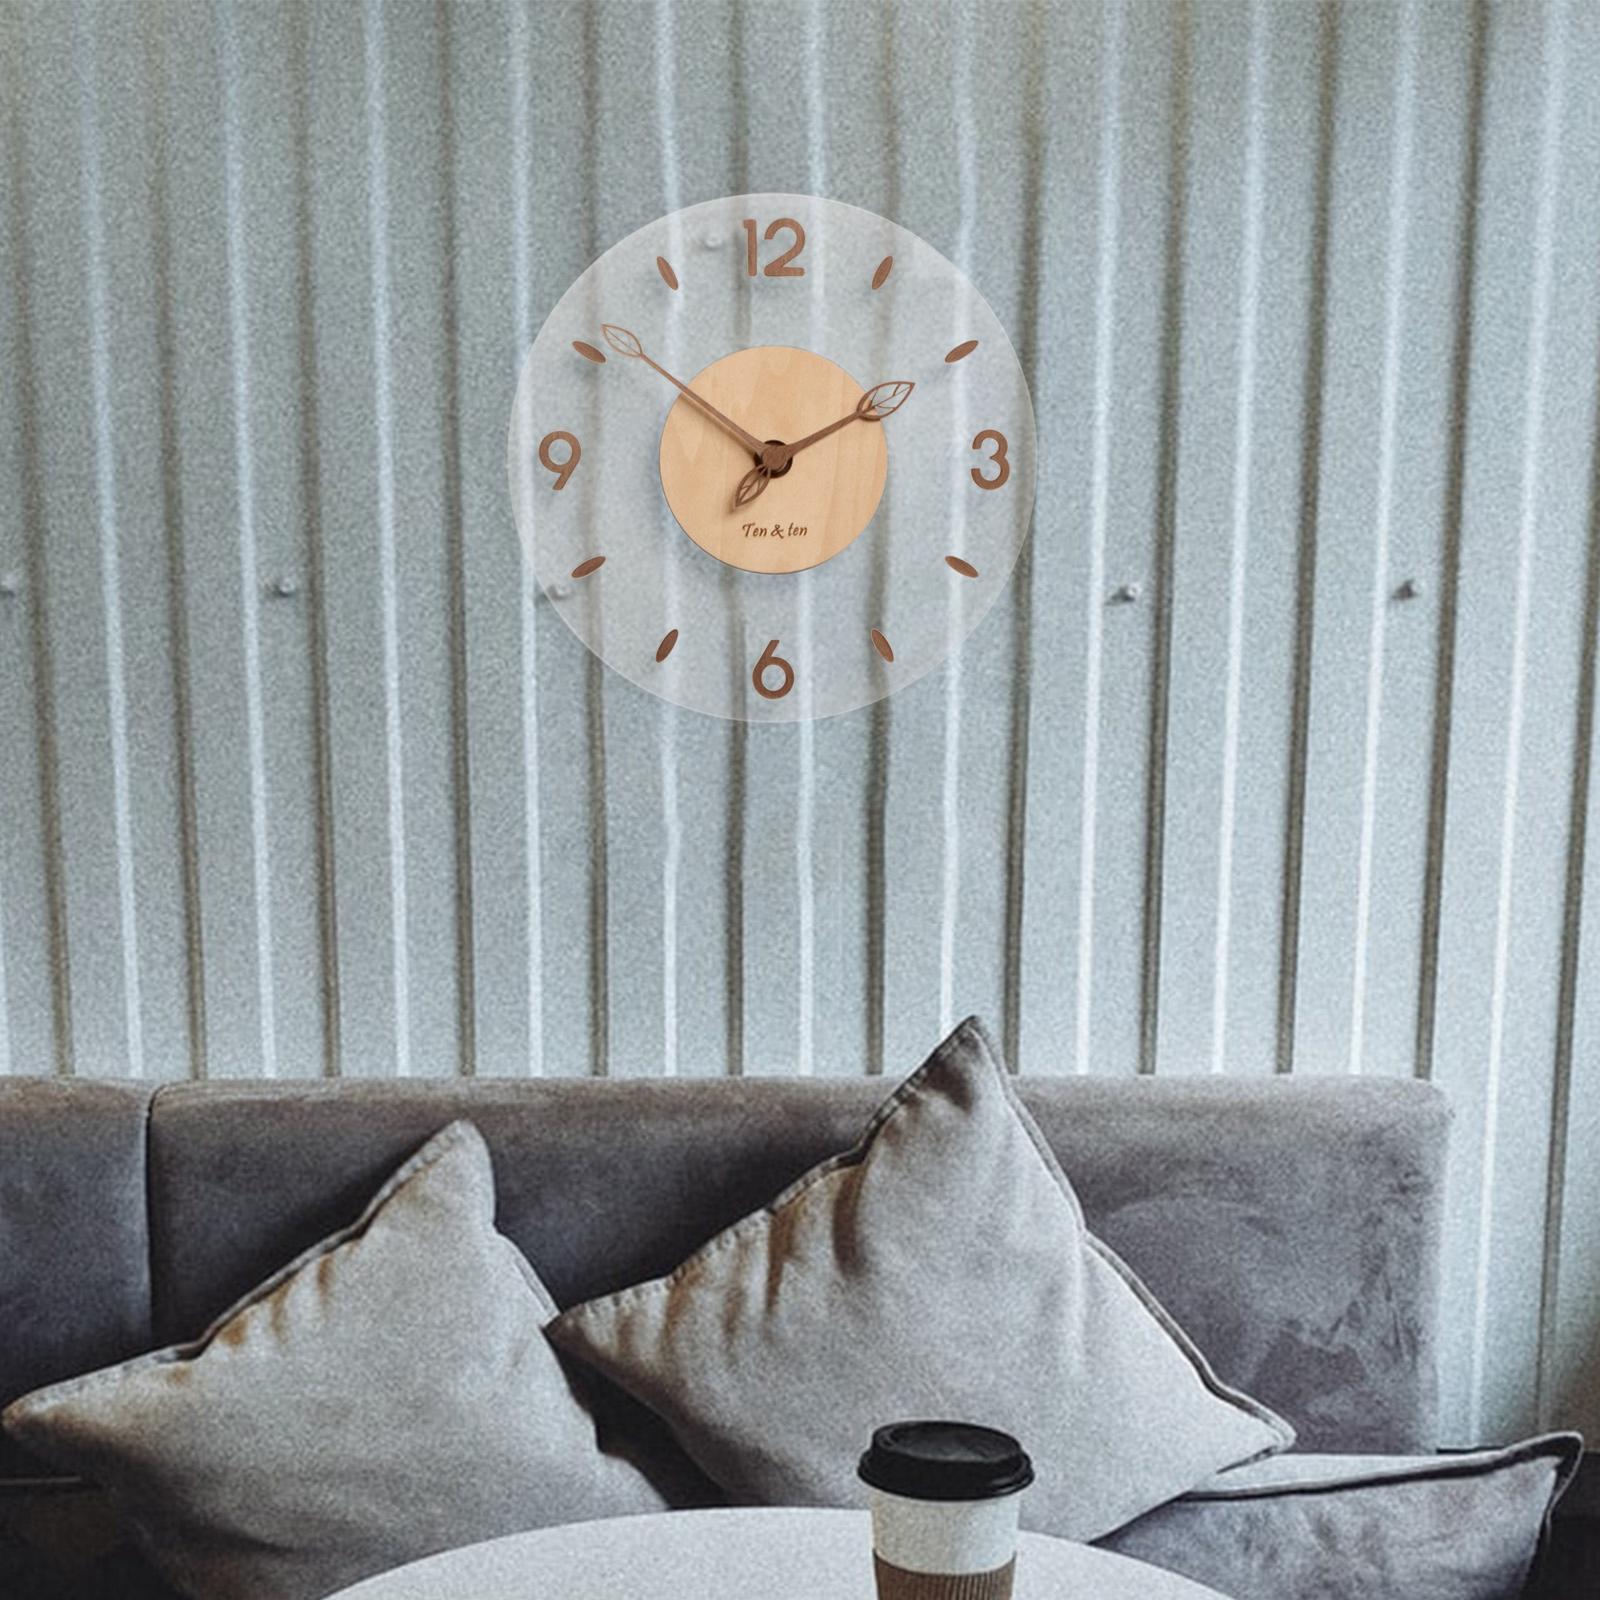 Wood Acrylic Wall Clock Silent Decorative Round Clocks for Shop Decoration 12inch